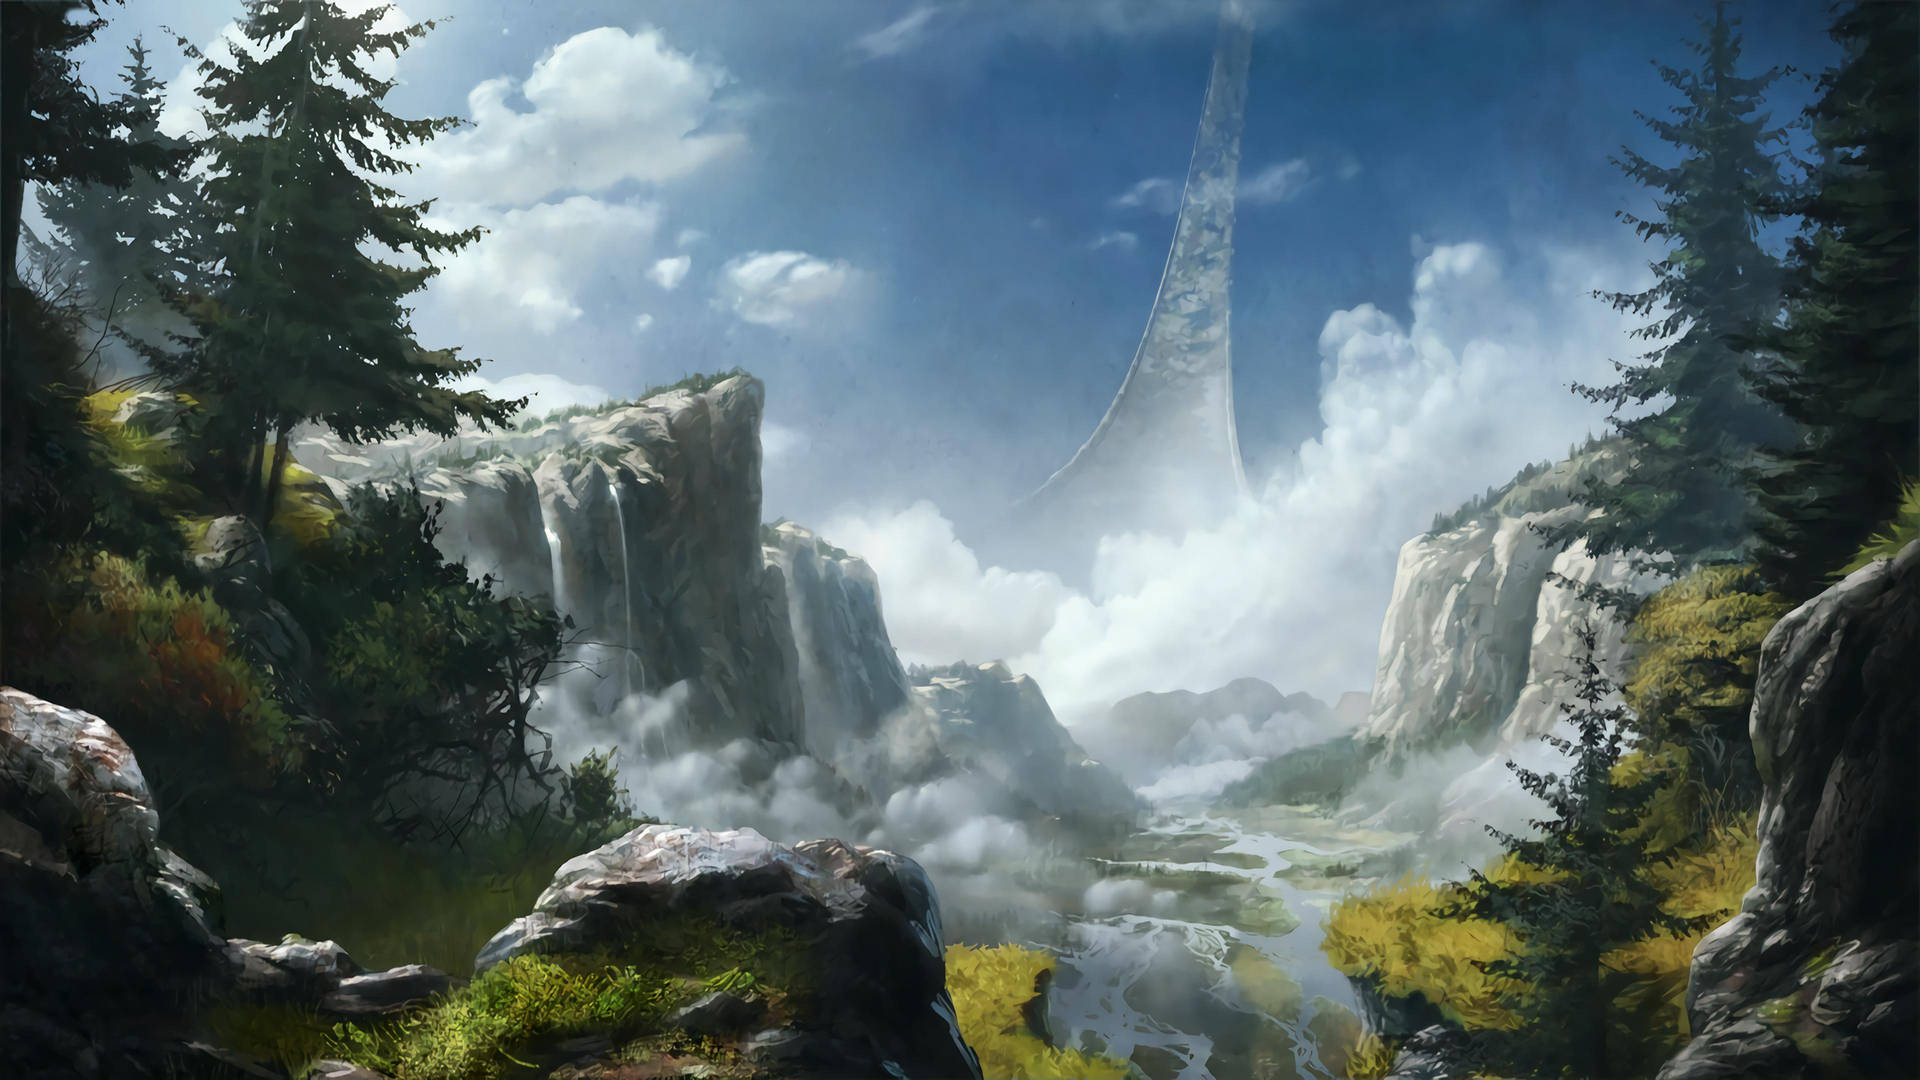 Halo Infinite Forest Scenery Wallpaper